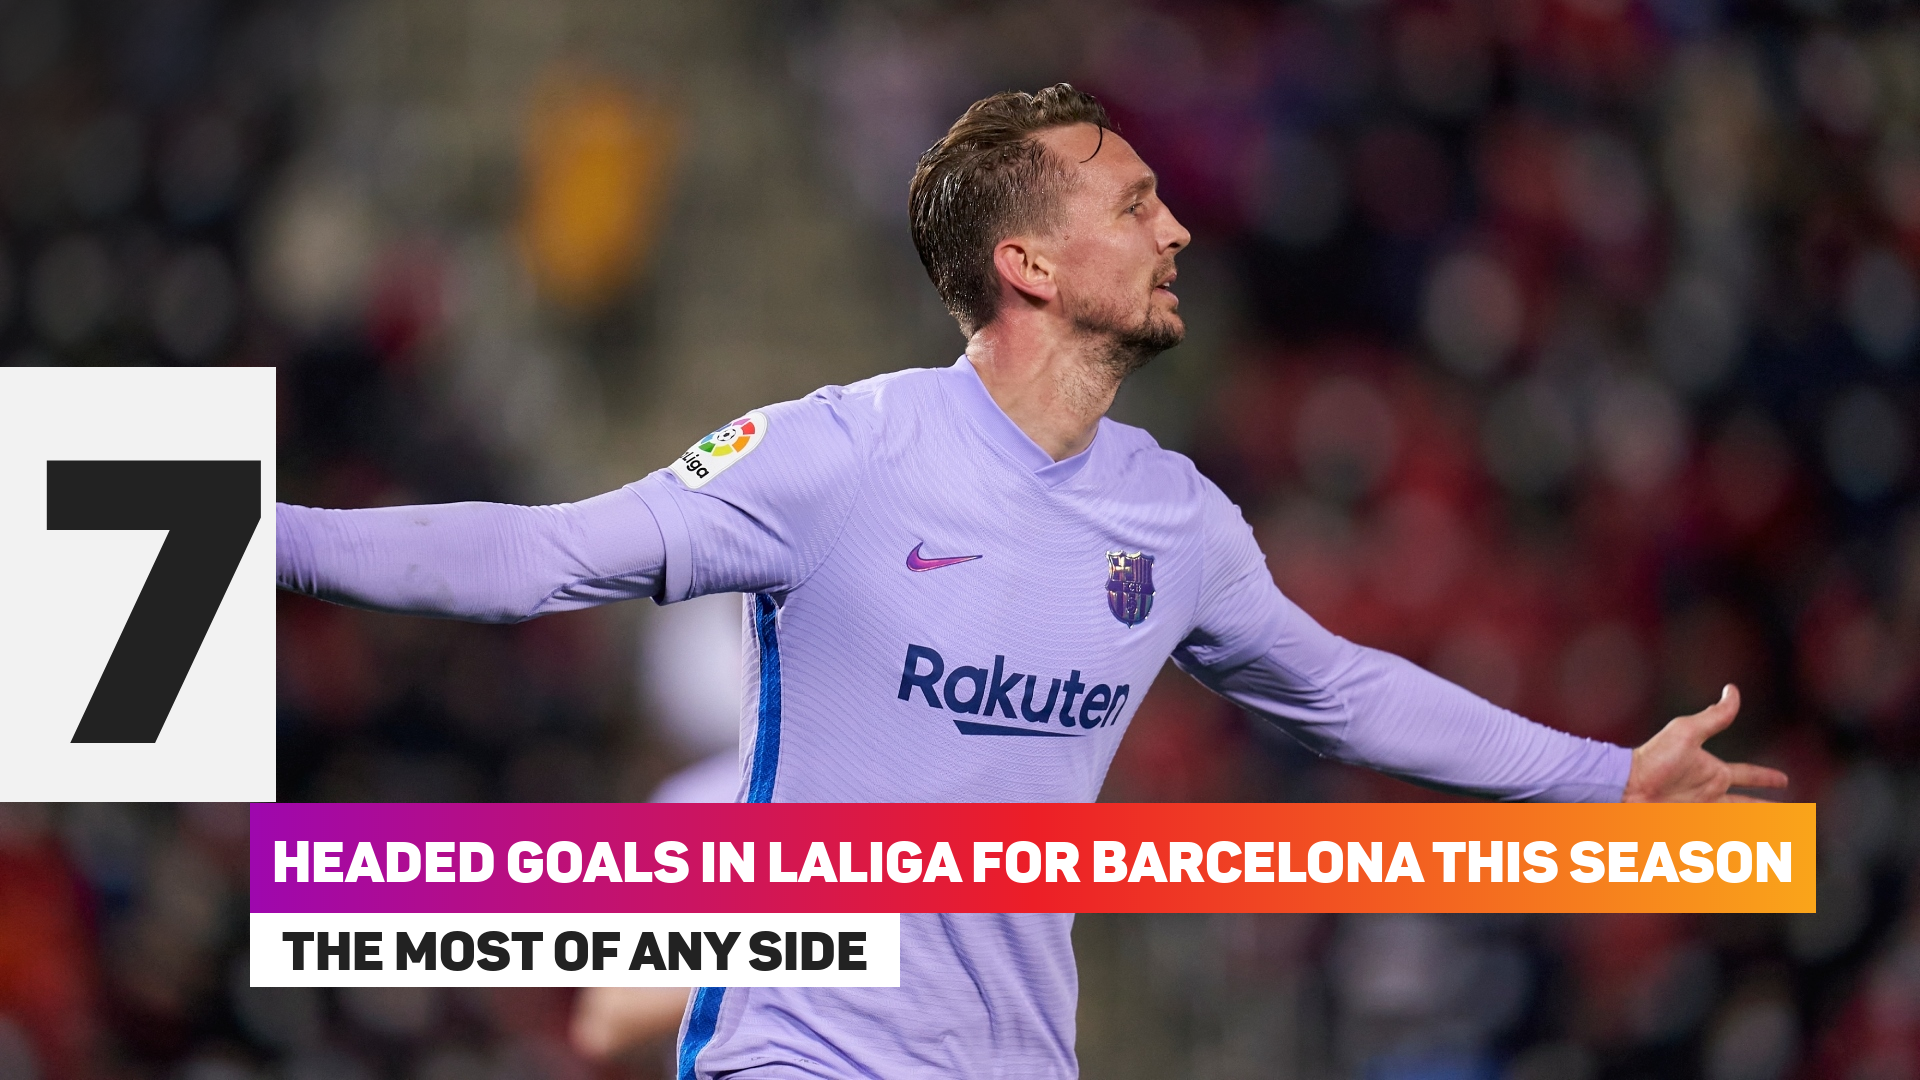 Barcelona have seven headed goals in LaLiga this season